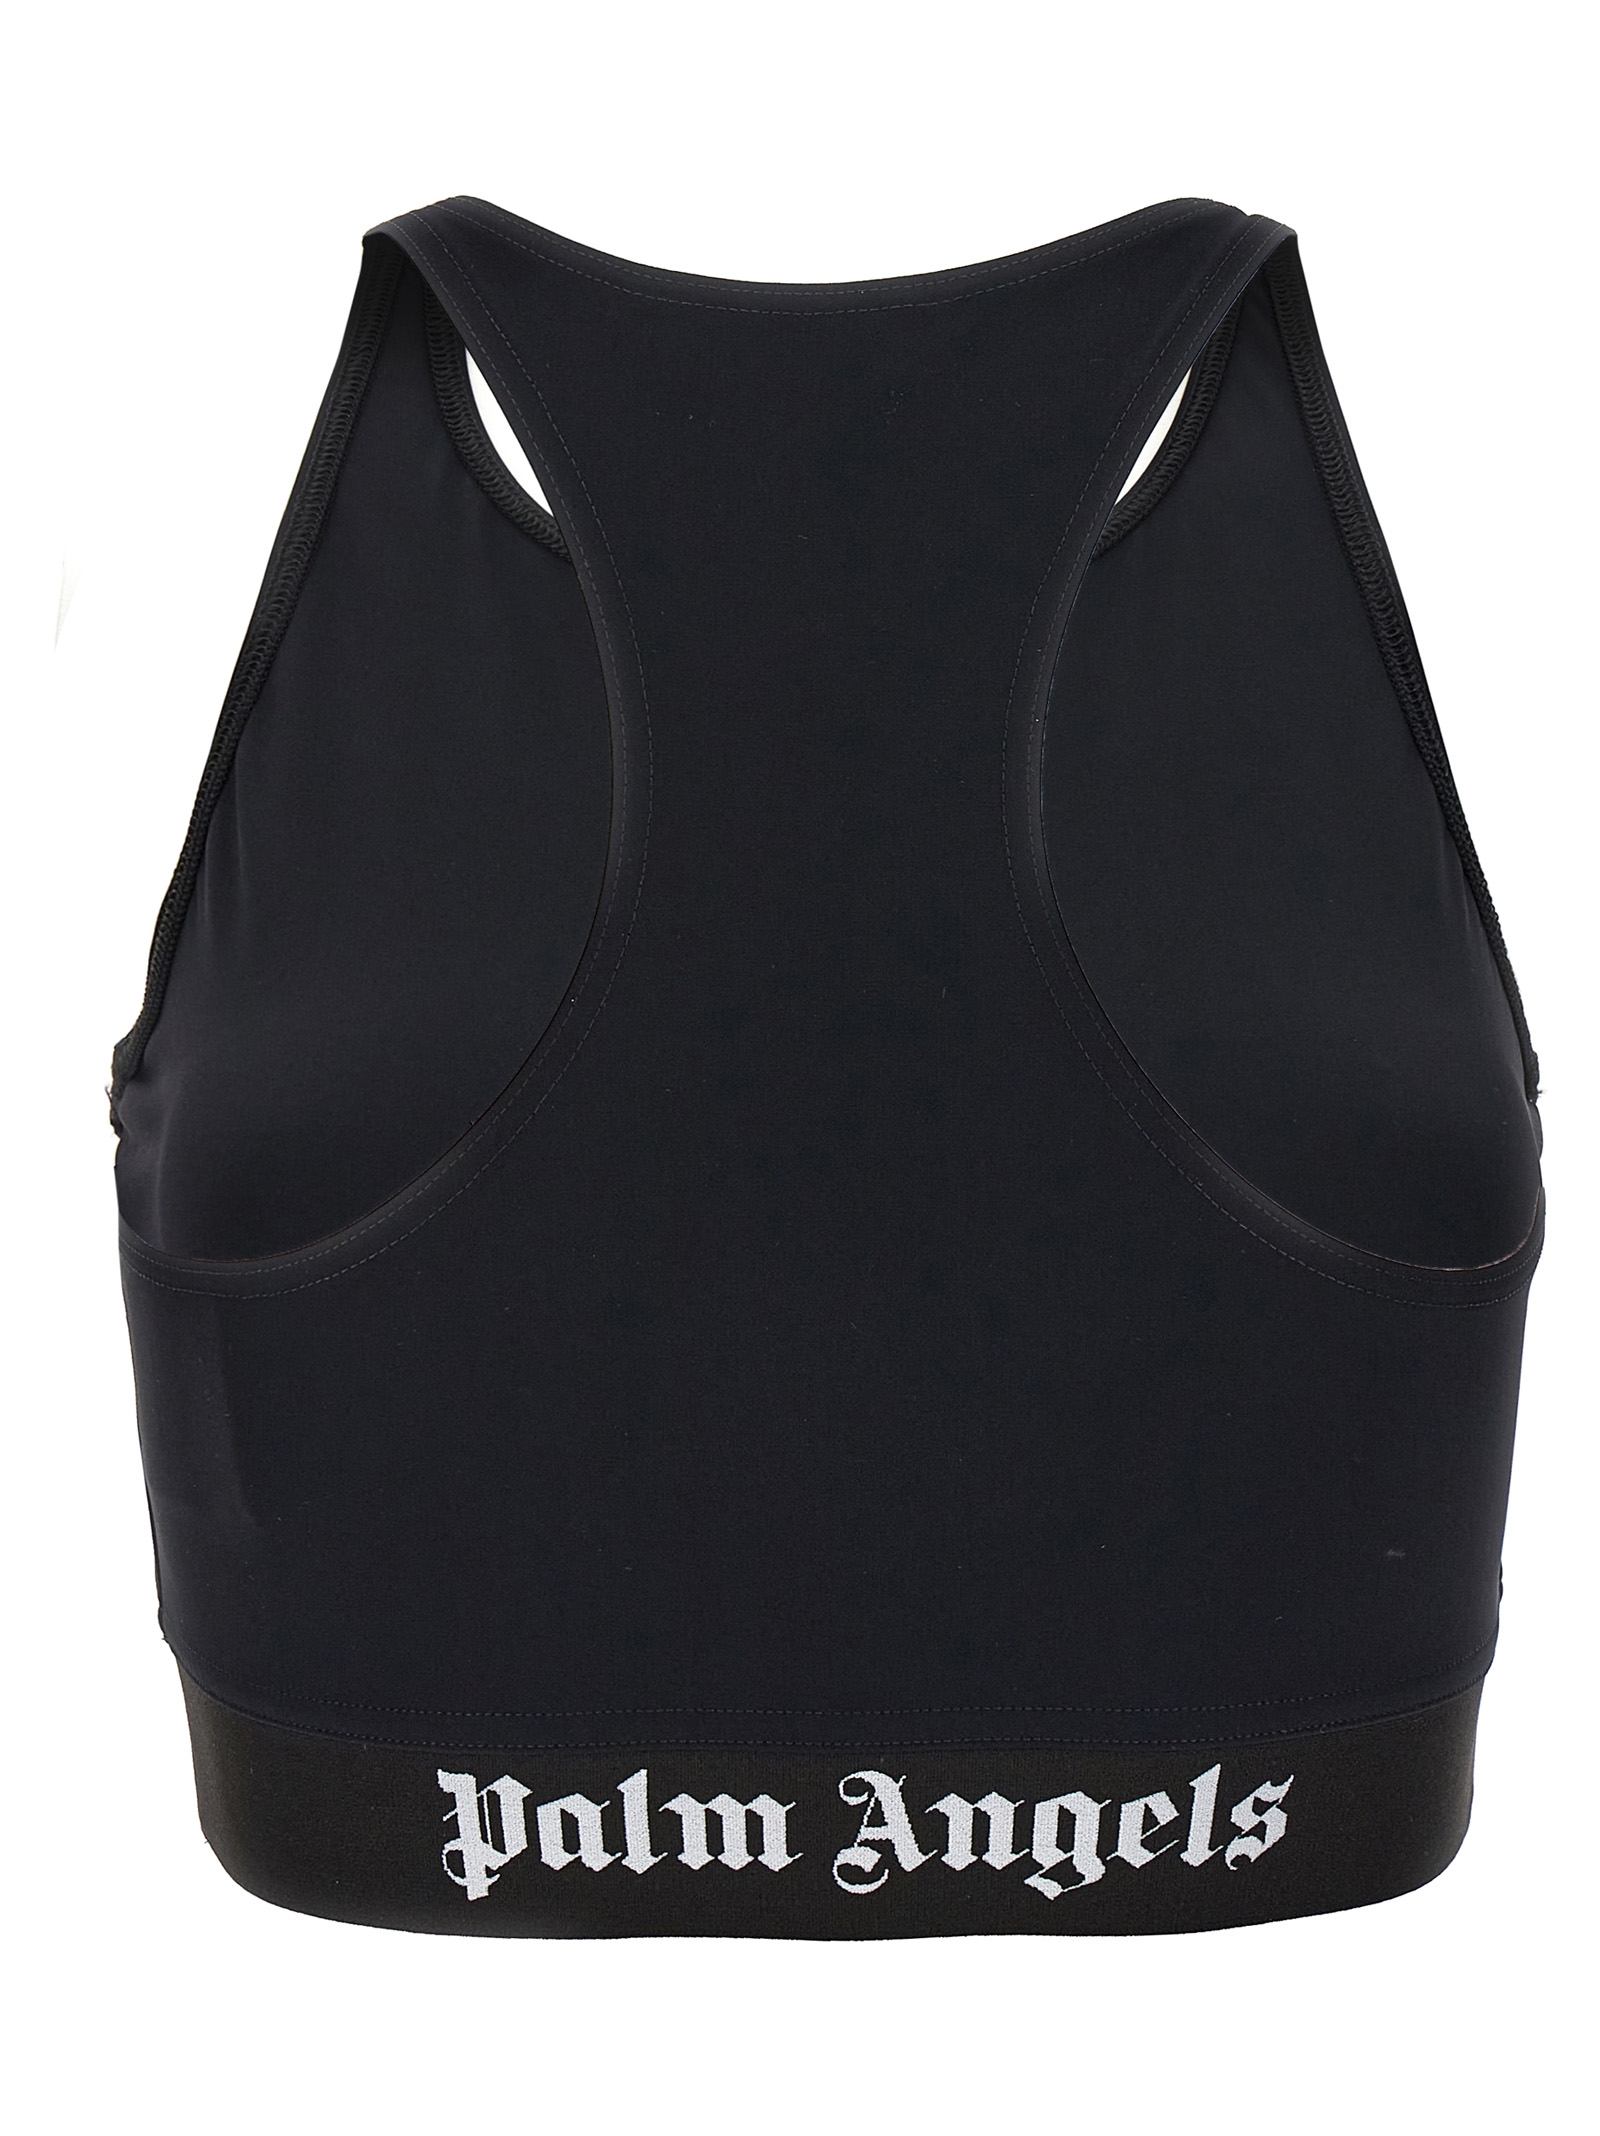 Palm Angels Black Graphic Sport Bra 'Black White